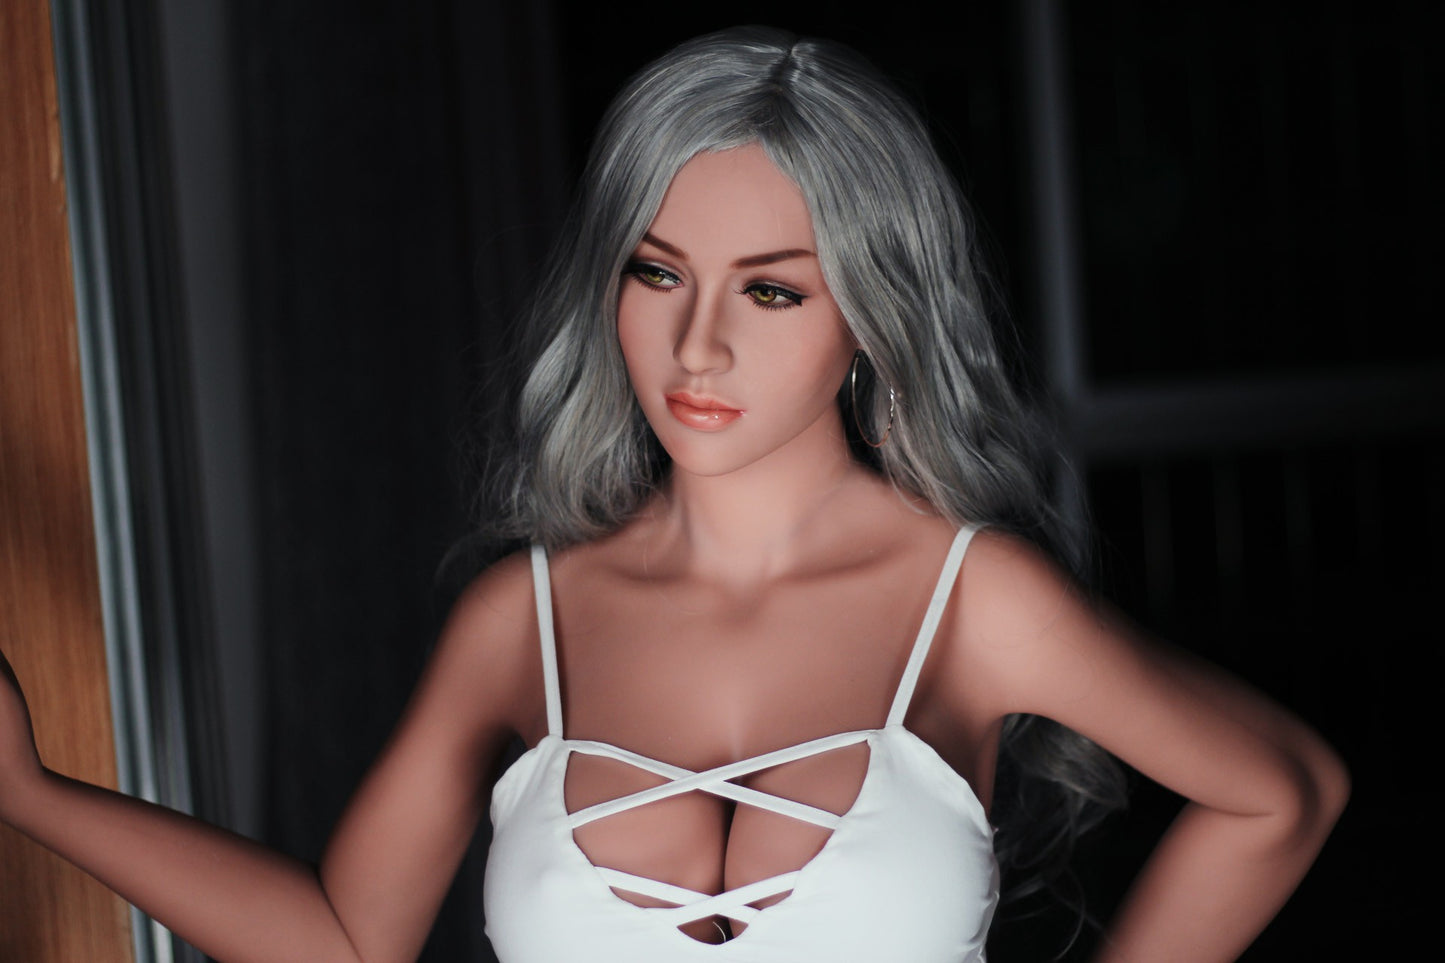 Barebie- Gorgeous Grey hair Ultra realistic TPE Sex Doll - WM Head 15